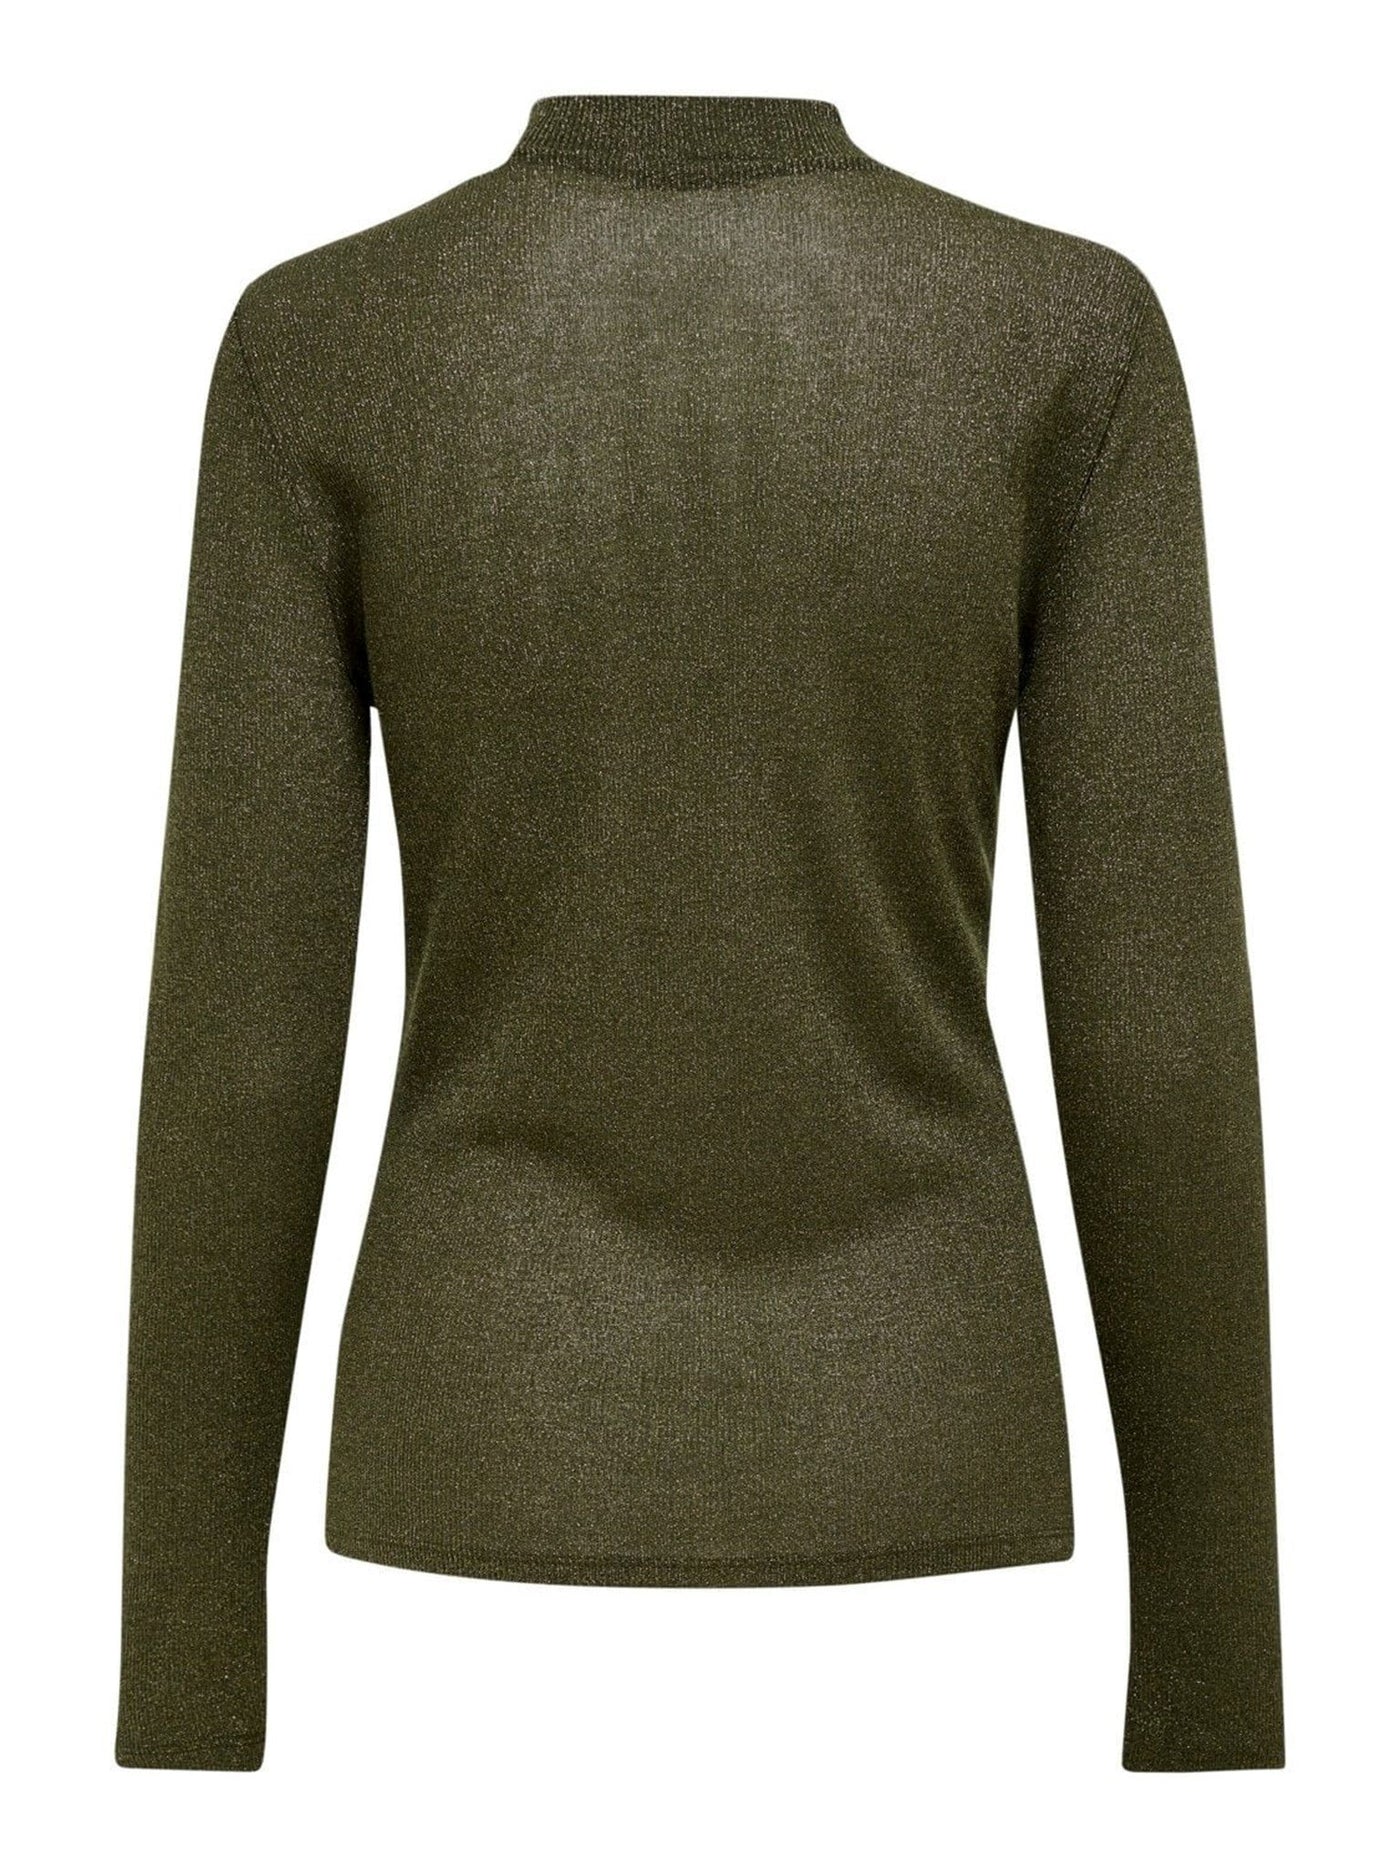 Långärmad  tröja med lurex detaljer - Murgröna - ONLY - Grön 3